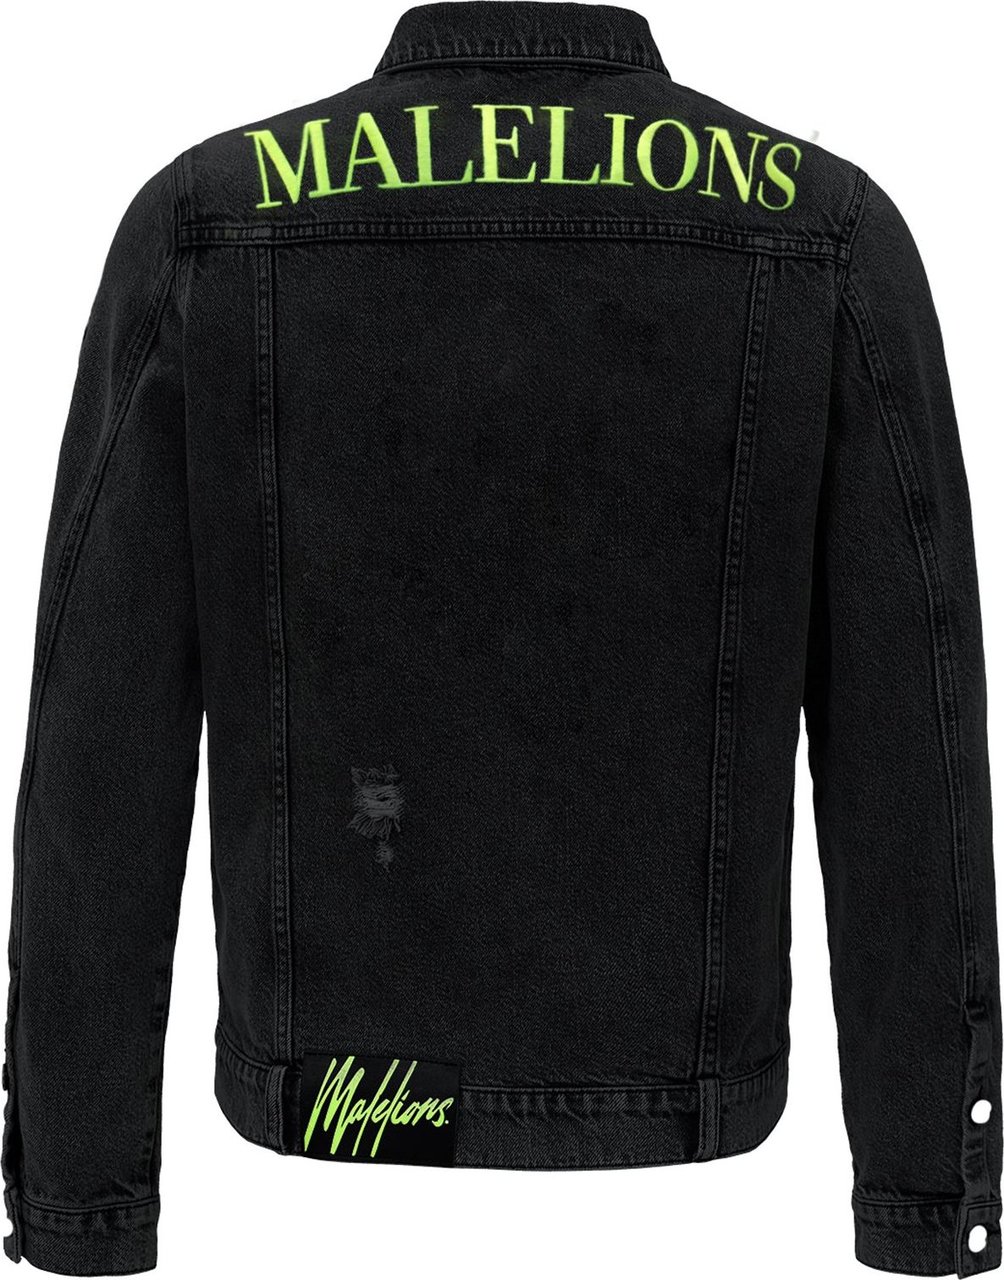 Malelions Vinegar Denim Jacket - Black/Yellow Zwart